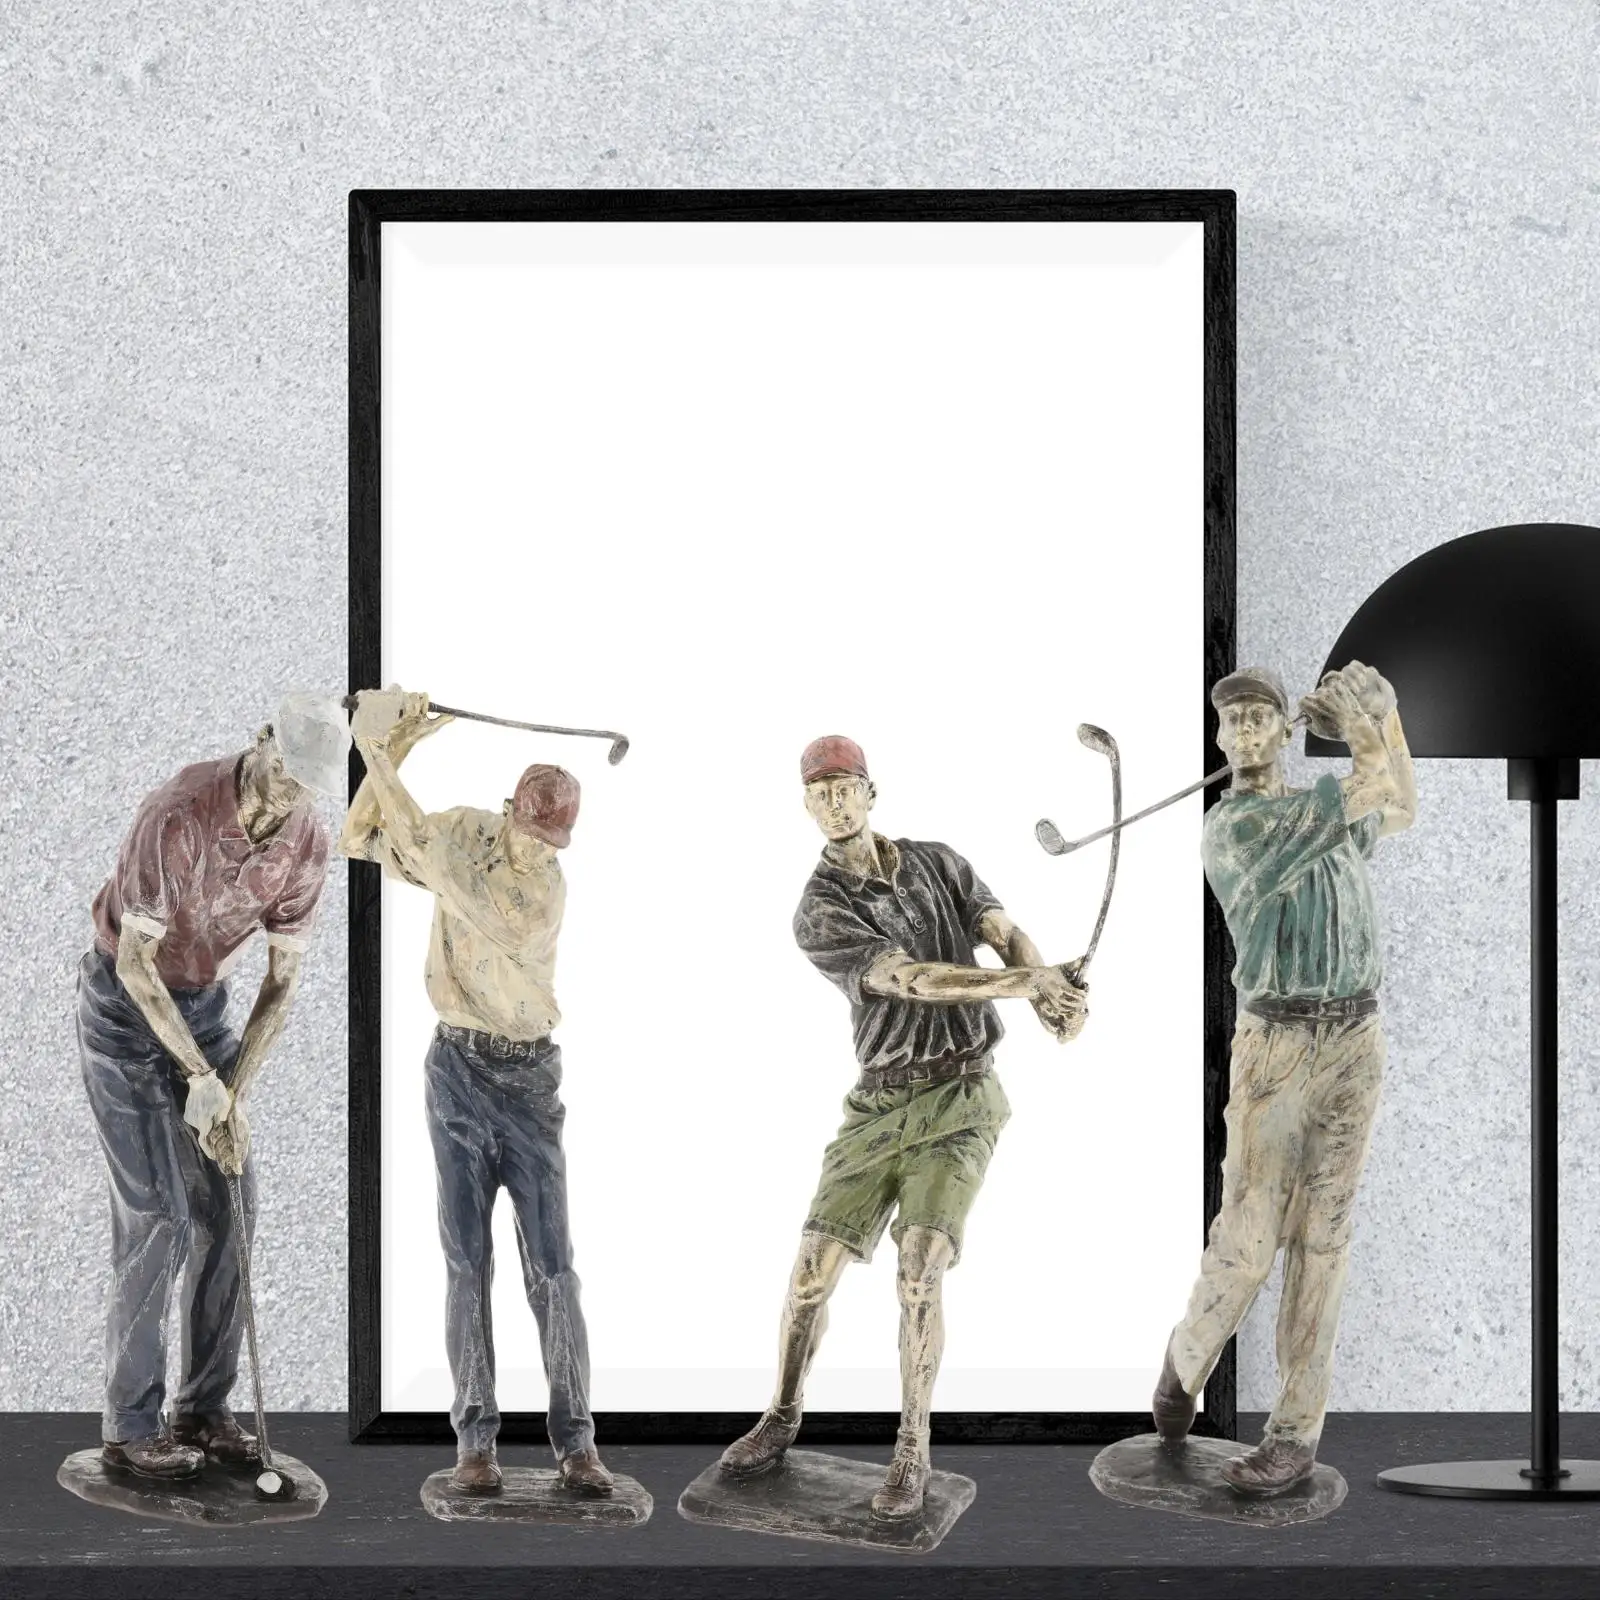 Decorative Man Golfer Statue Ornament Handcrafts Sculpture Swinging A Golf Sport Club Shelf Bookcase Decor Gift Collectible